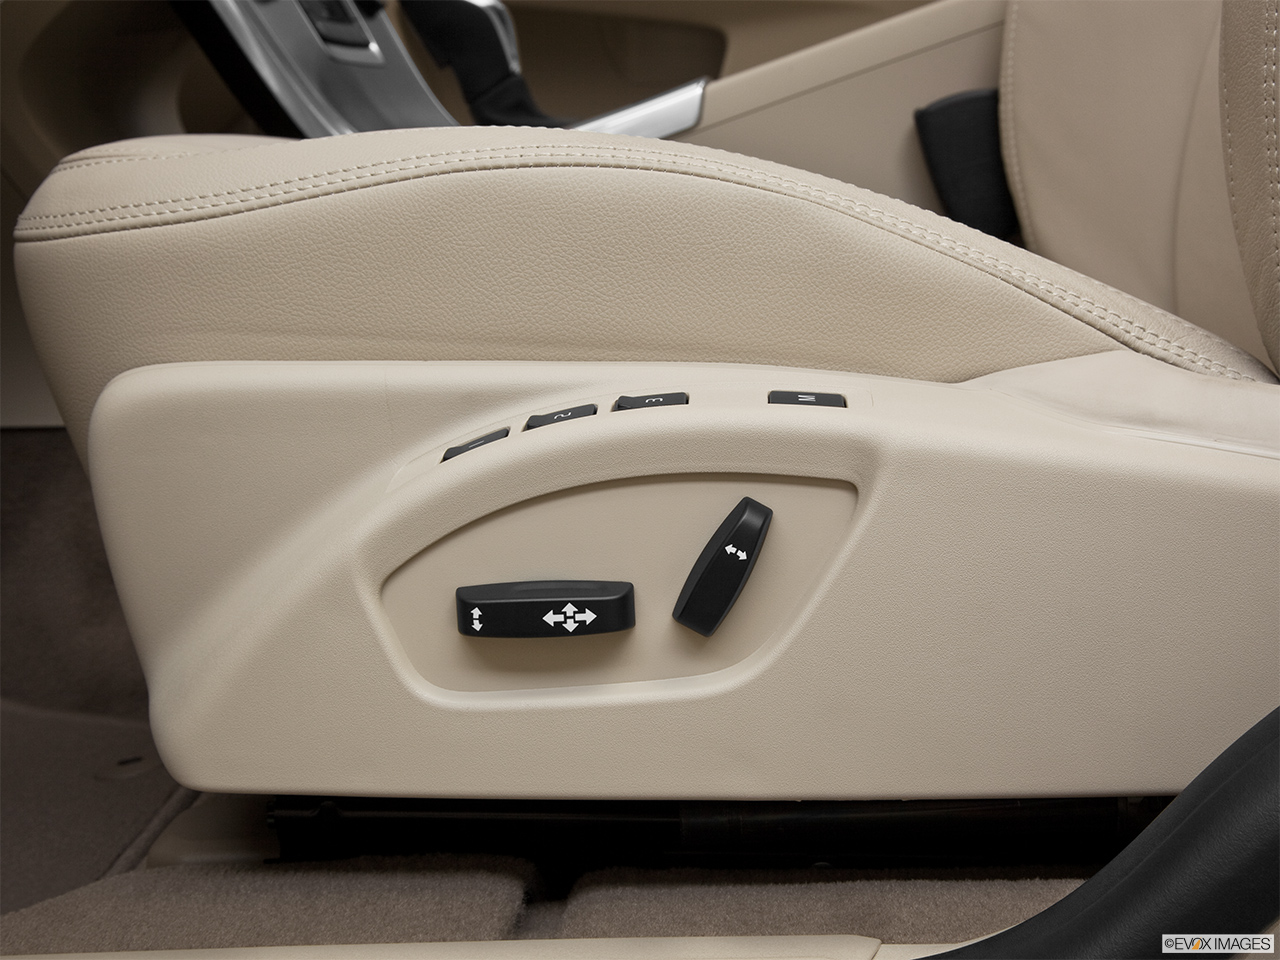 2013 Volvo XC60 3.2 FWD Premier Plus Seat Adjustment Controllers. 